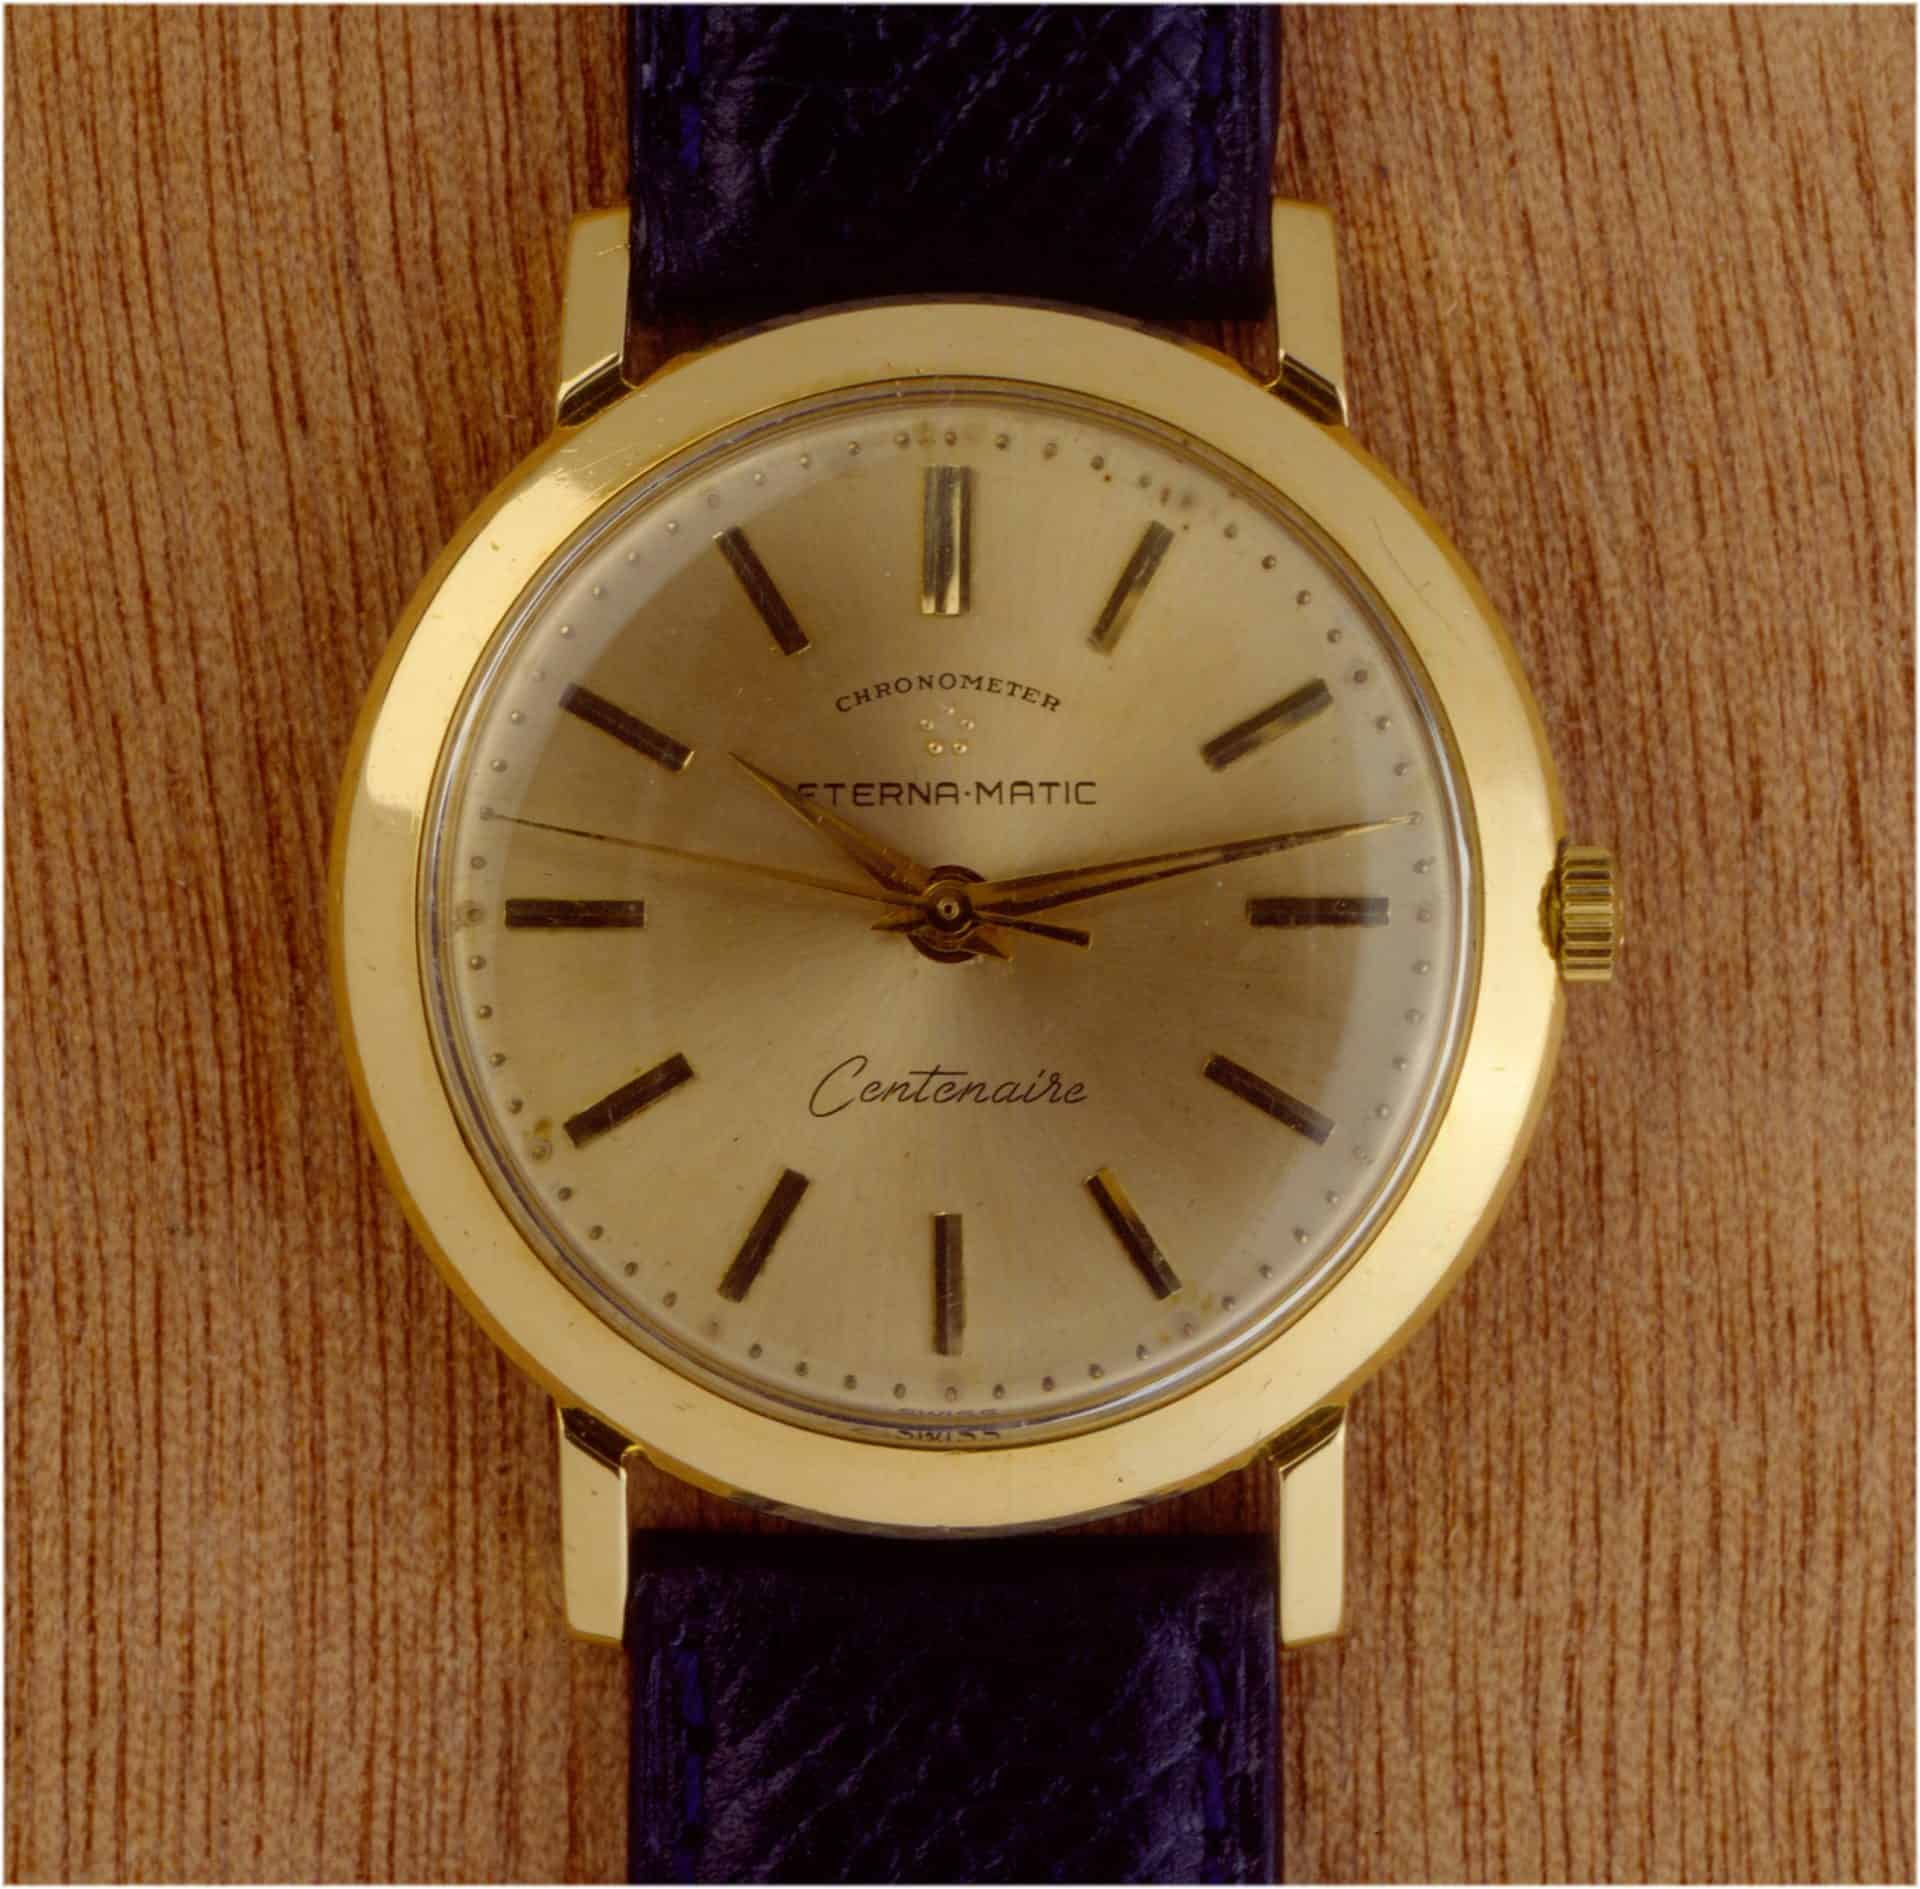  Eterna-Matic Centenaire Chronometer